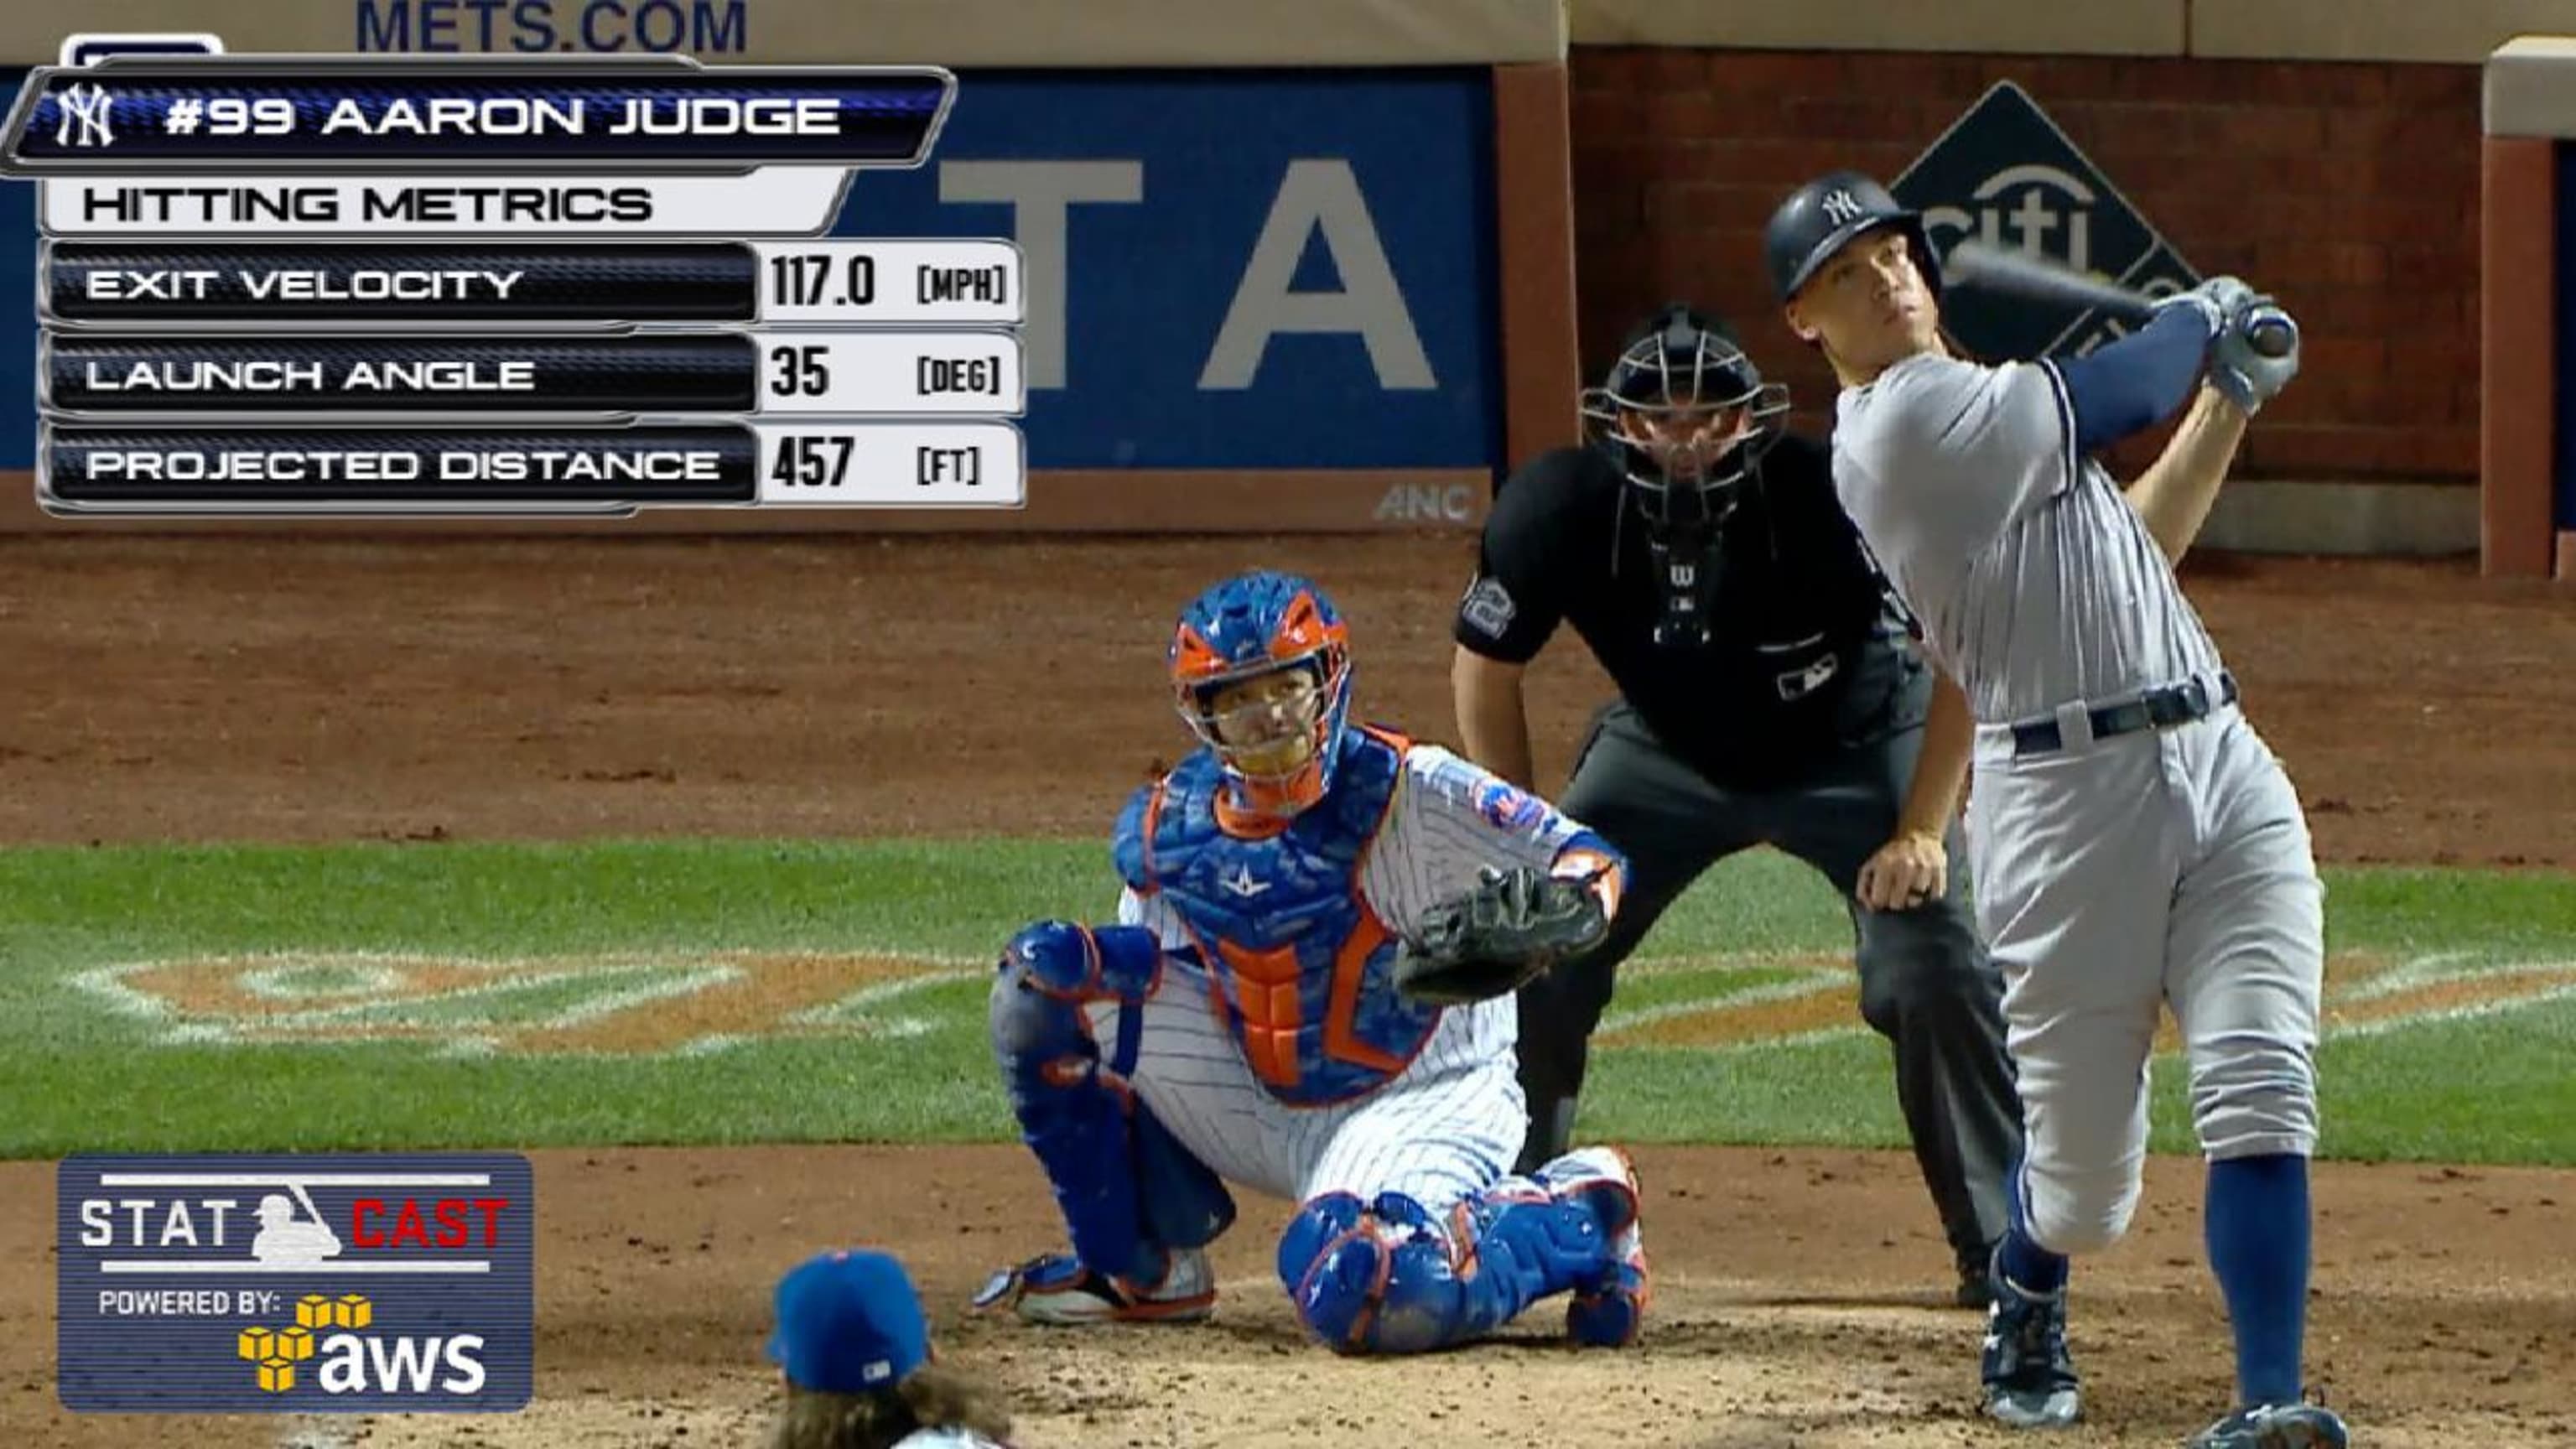 Yankees slugger Aaron Judge leaves in 3rd inning vs. Mets with